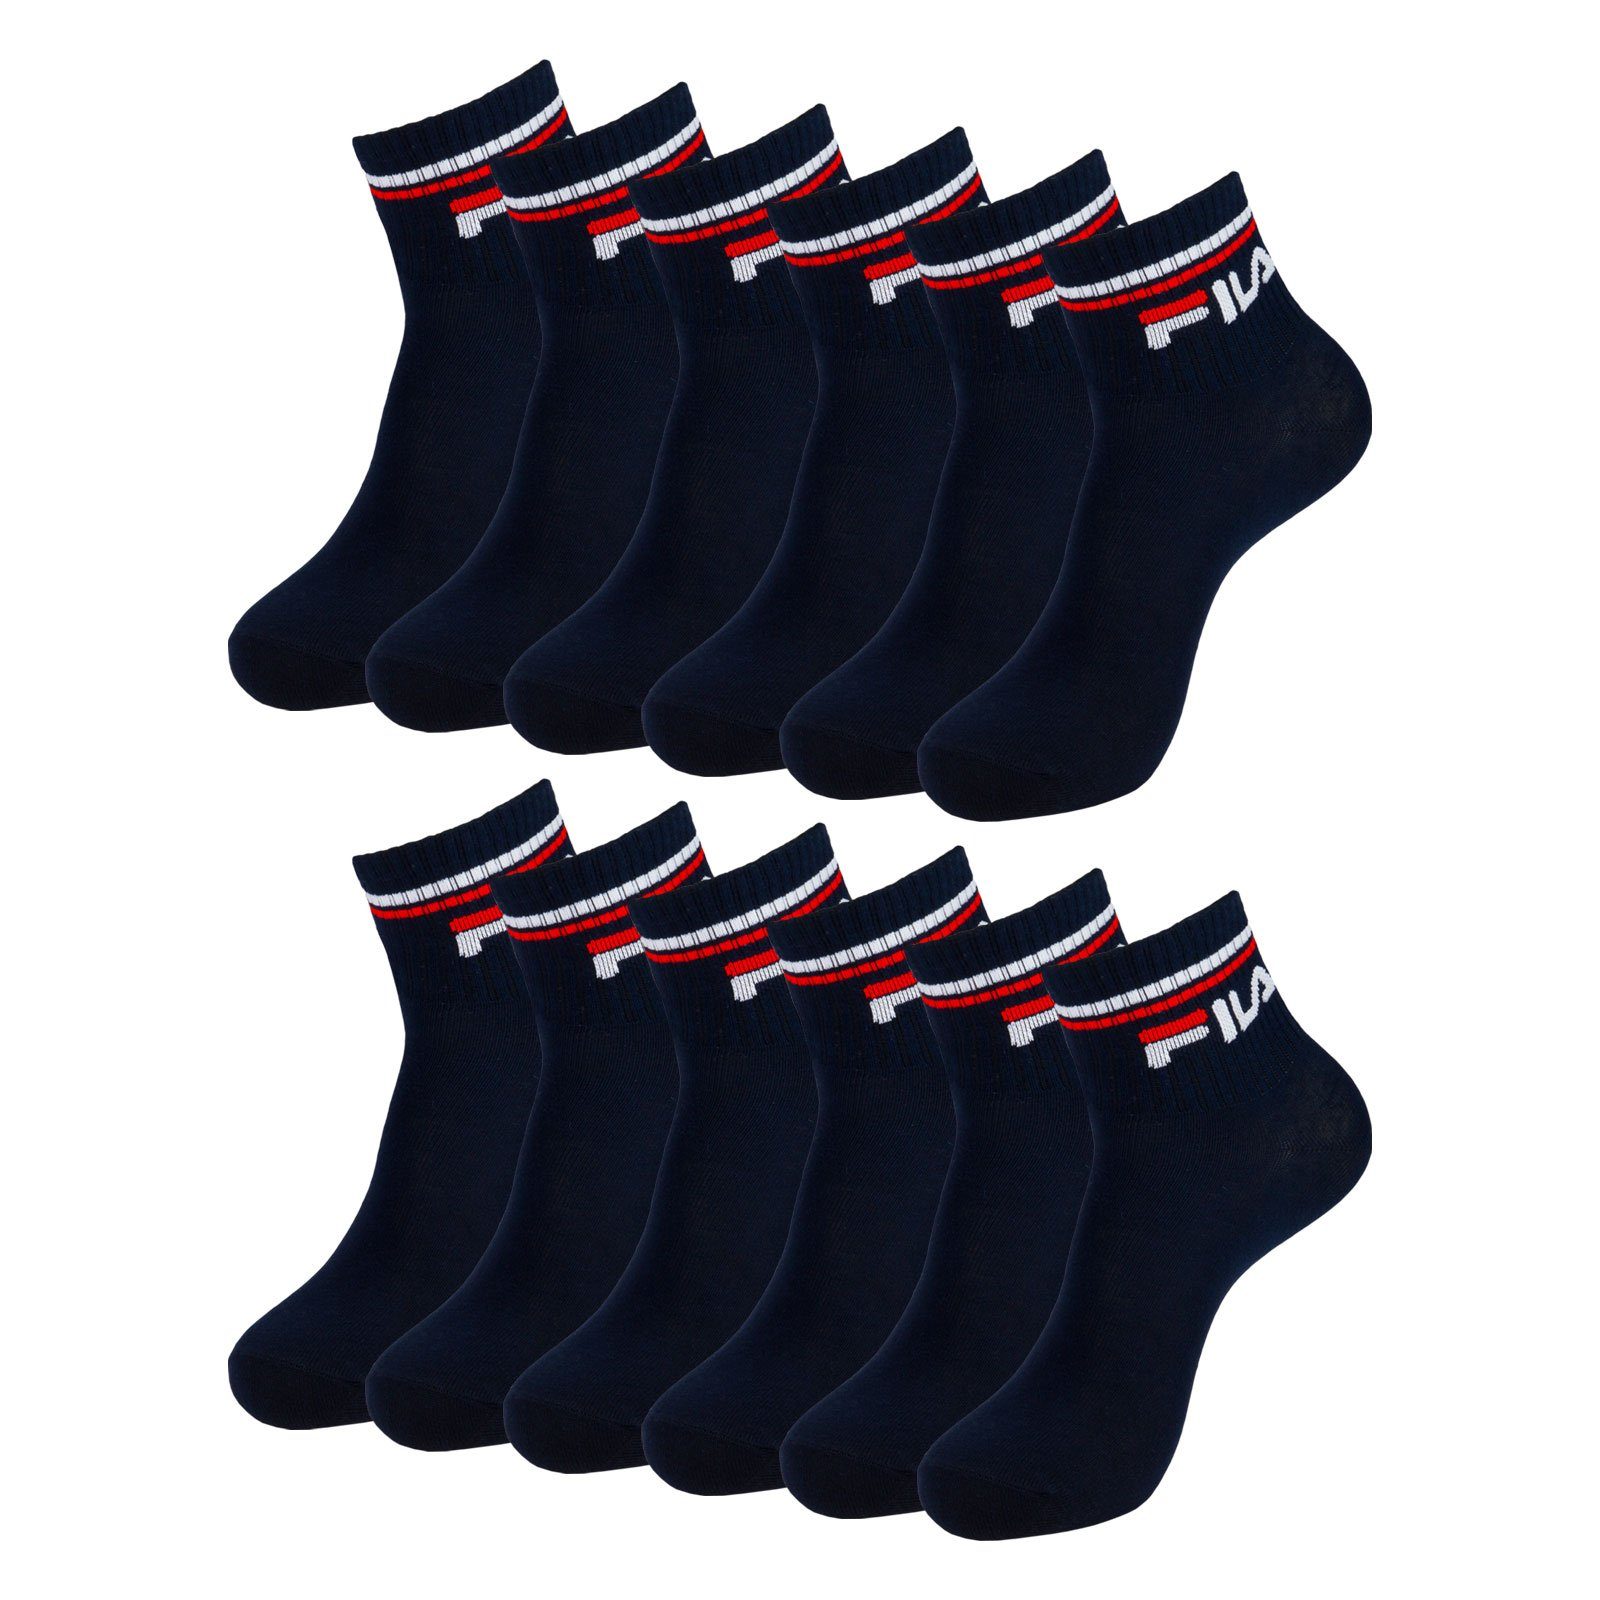 Fila Kurzsocken Quarter Socks Calza (6-Paar) im sportlichen Look mit Rippbündchen 321 navy